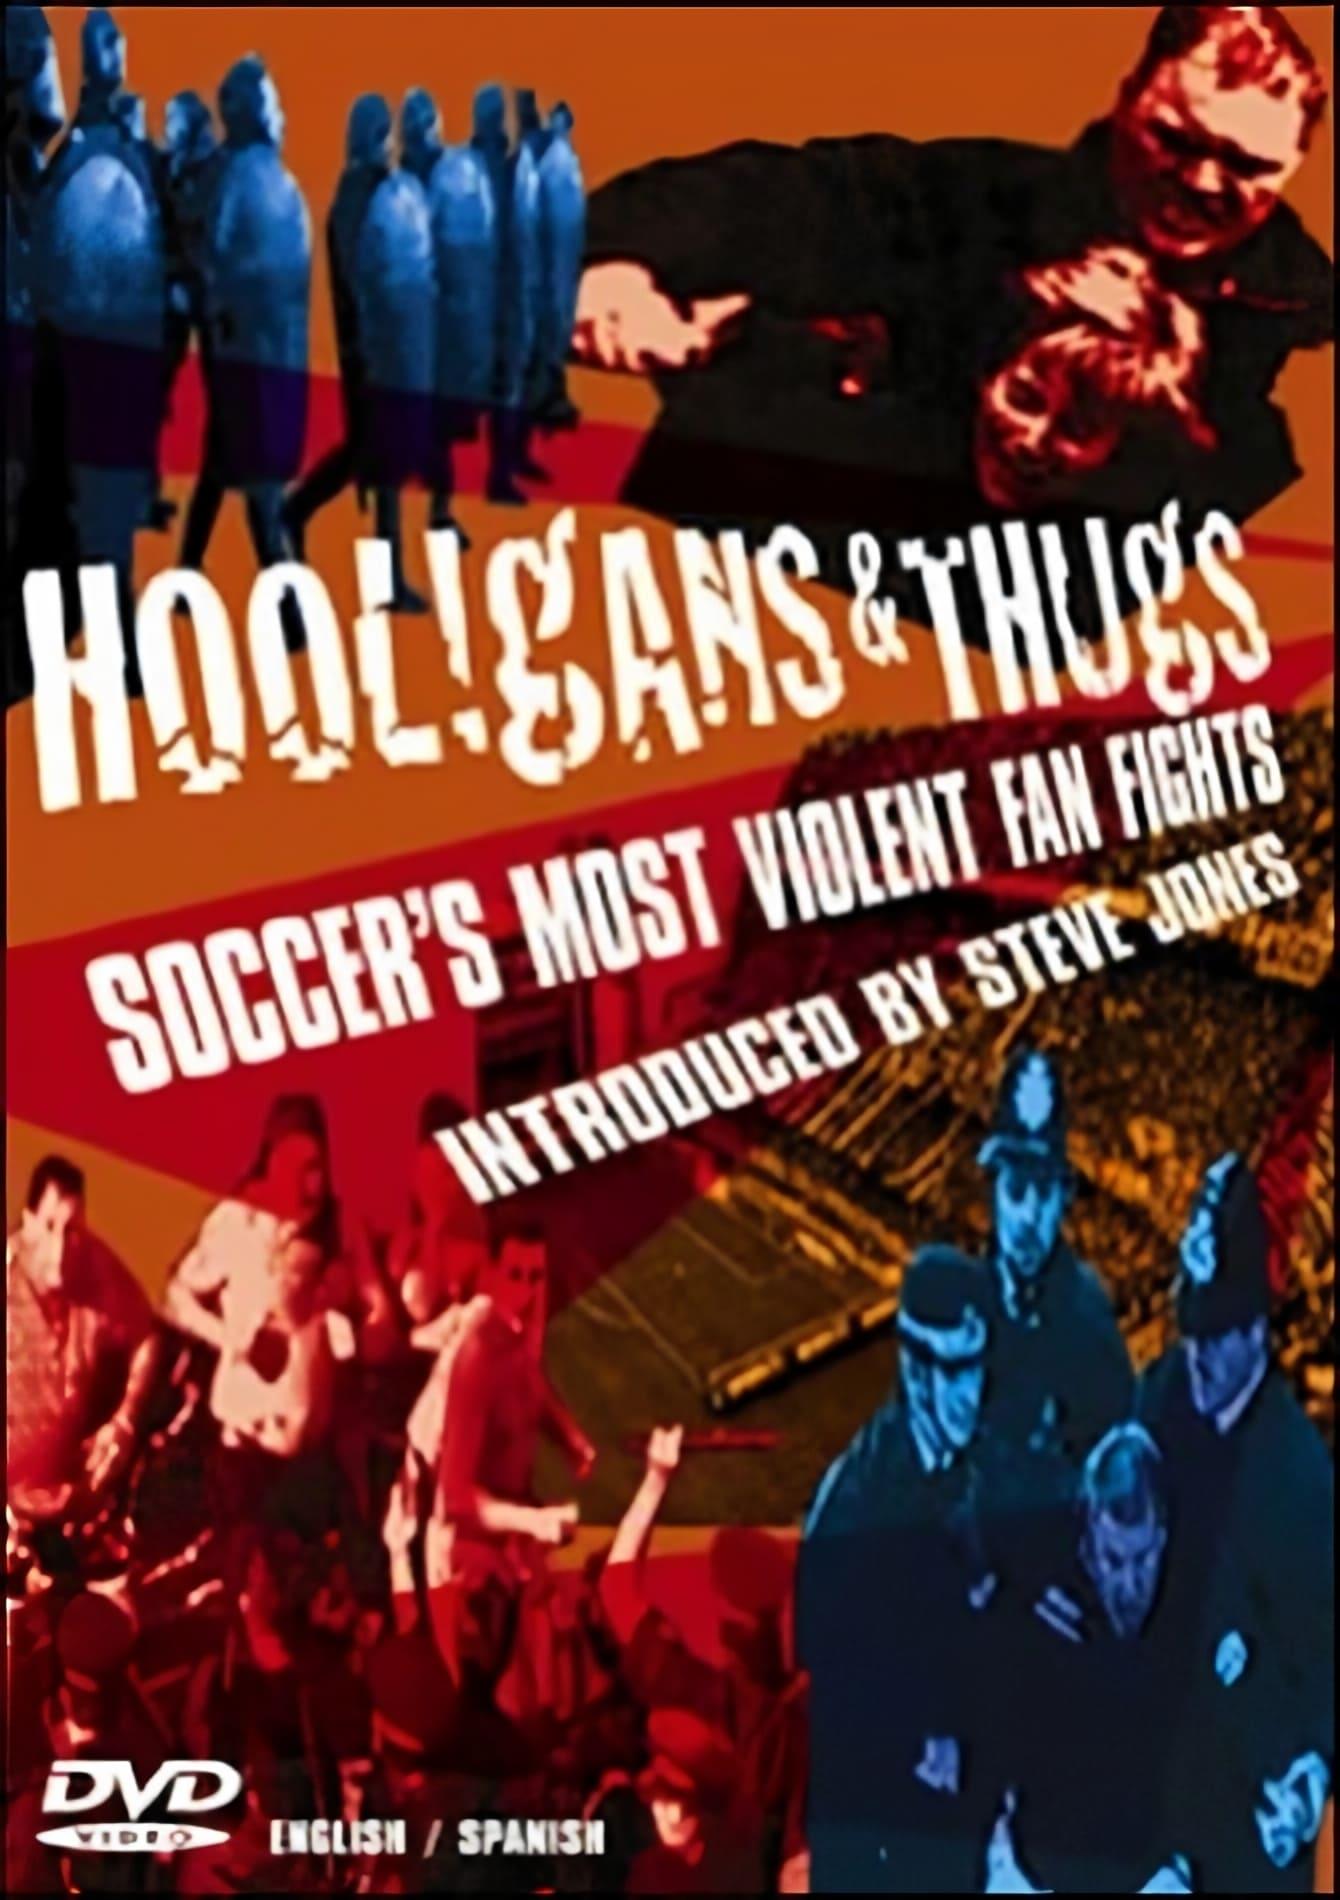 Hooligans & Thugs: Soccer's Most Violent Fan Fights poster